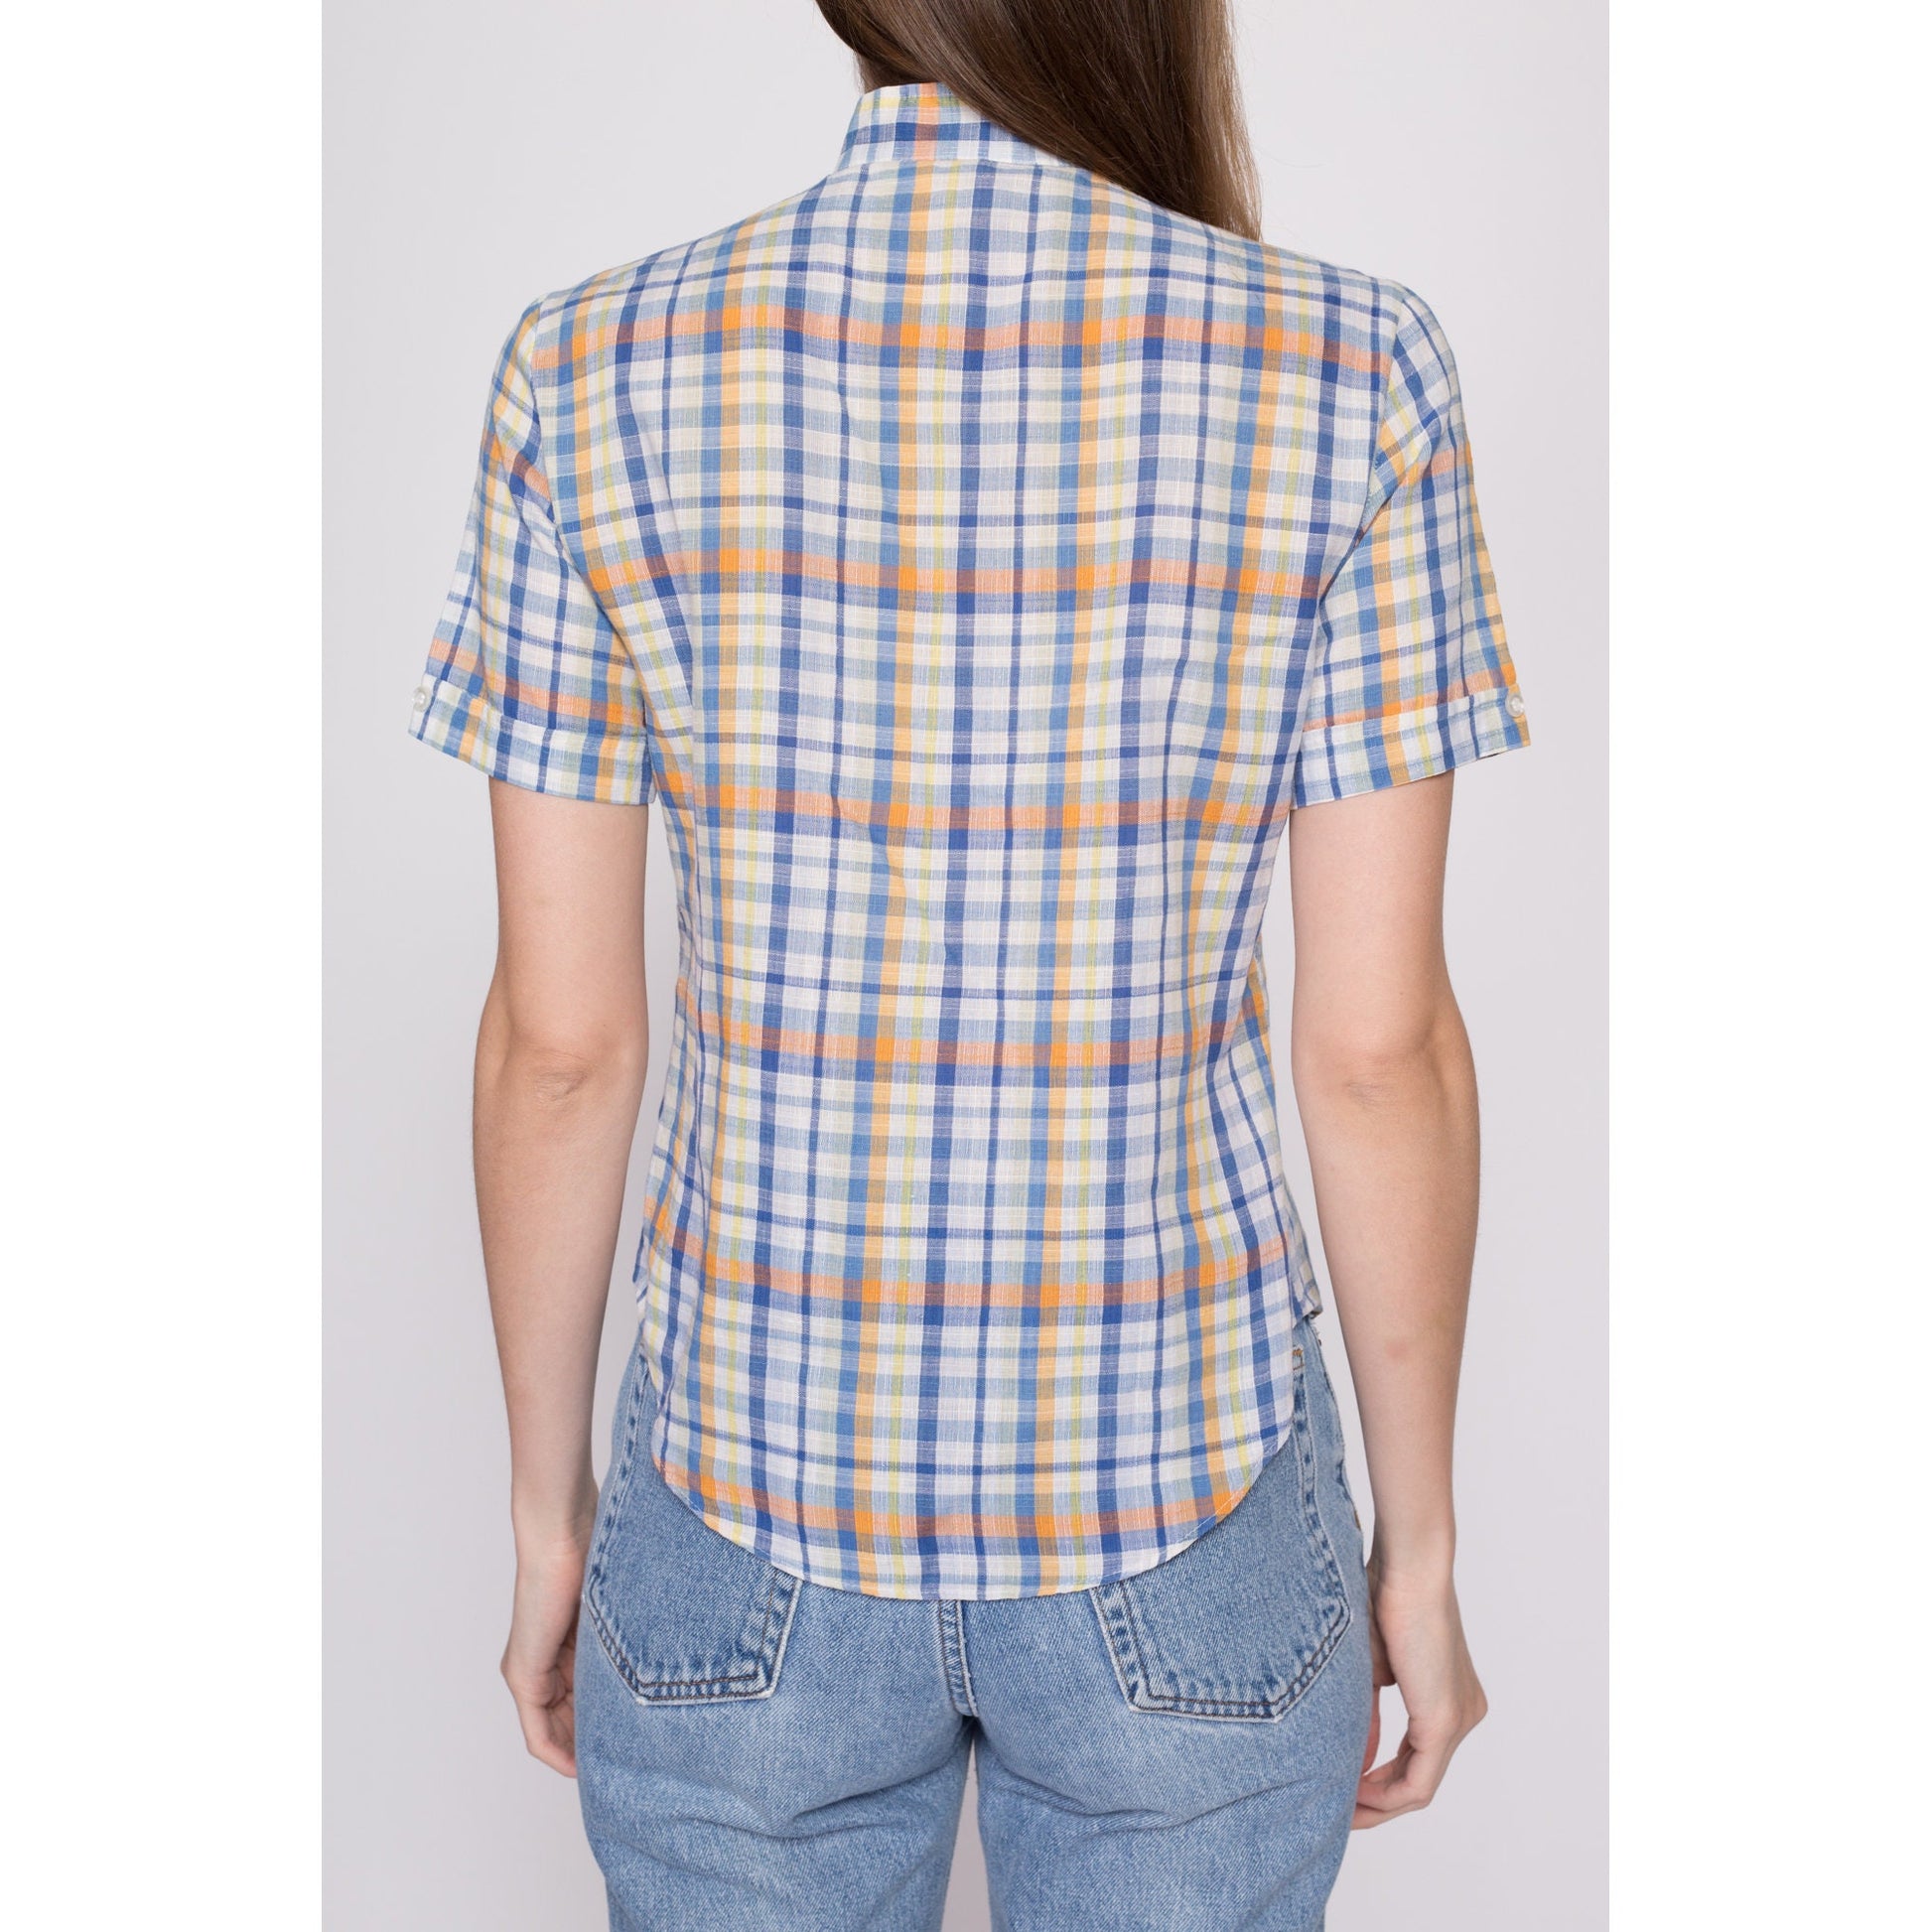 eB7 Lucky Brand Womens Shirt Small Plaid Crepe Orange White Blue 7W45361  193315362878 on eBid United States